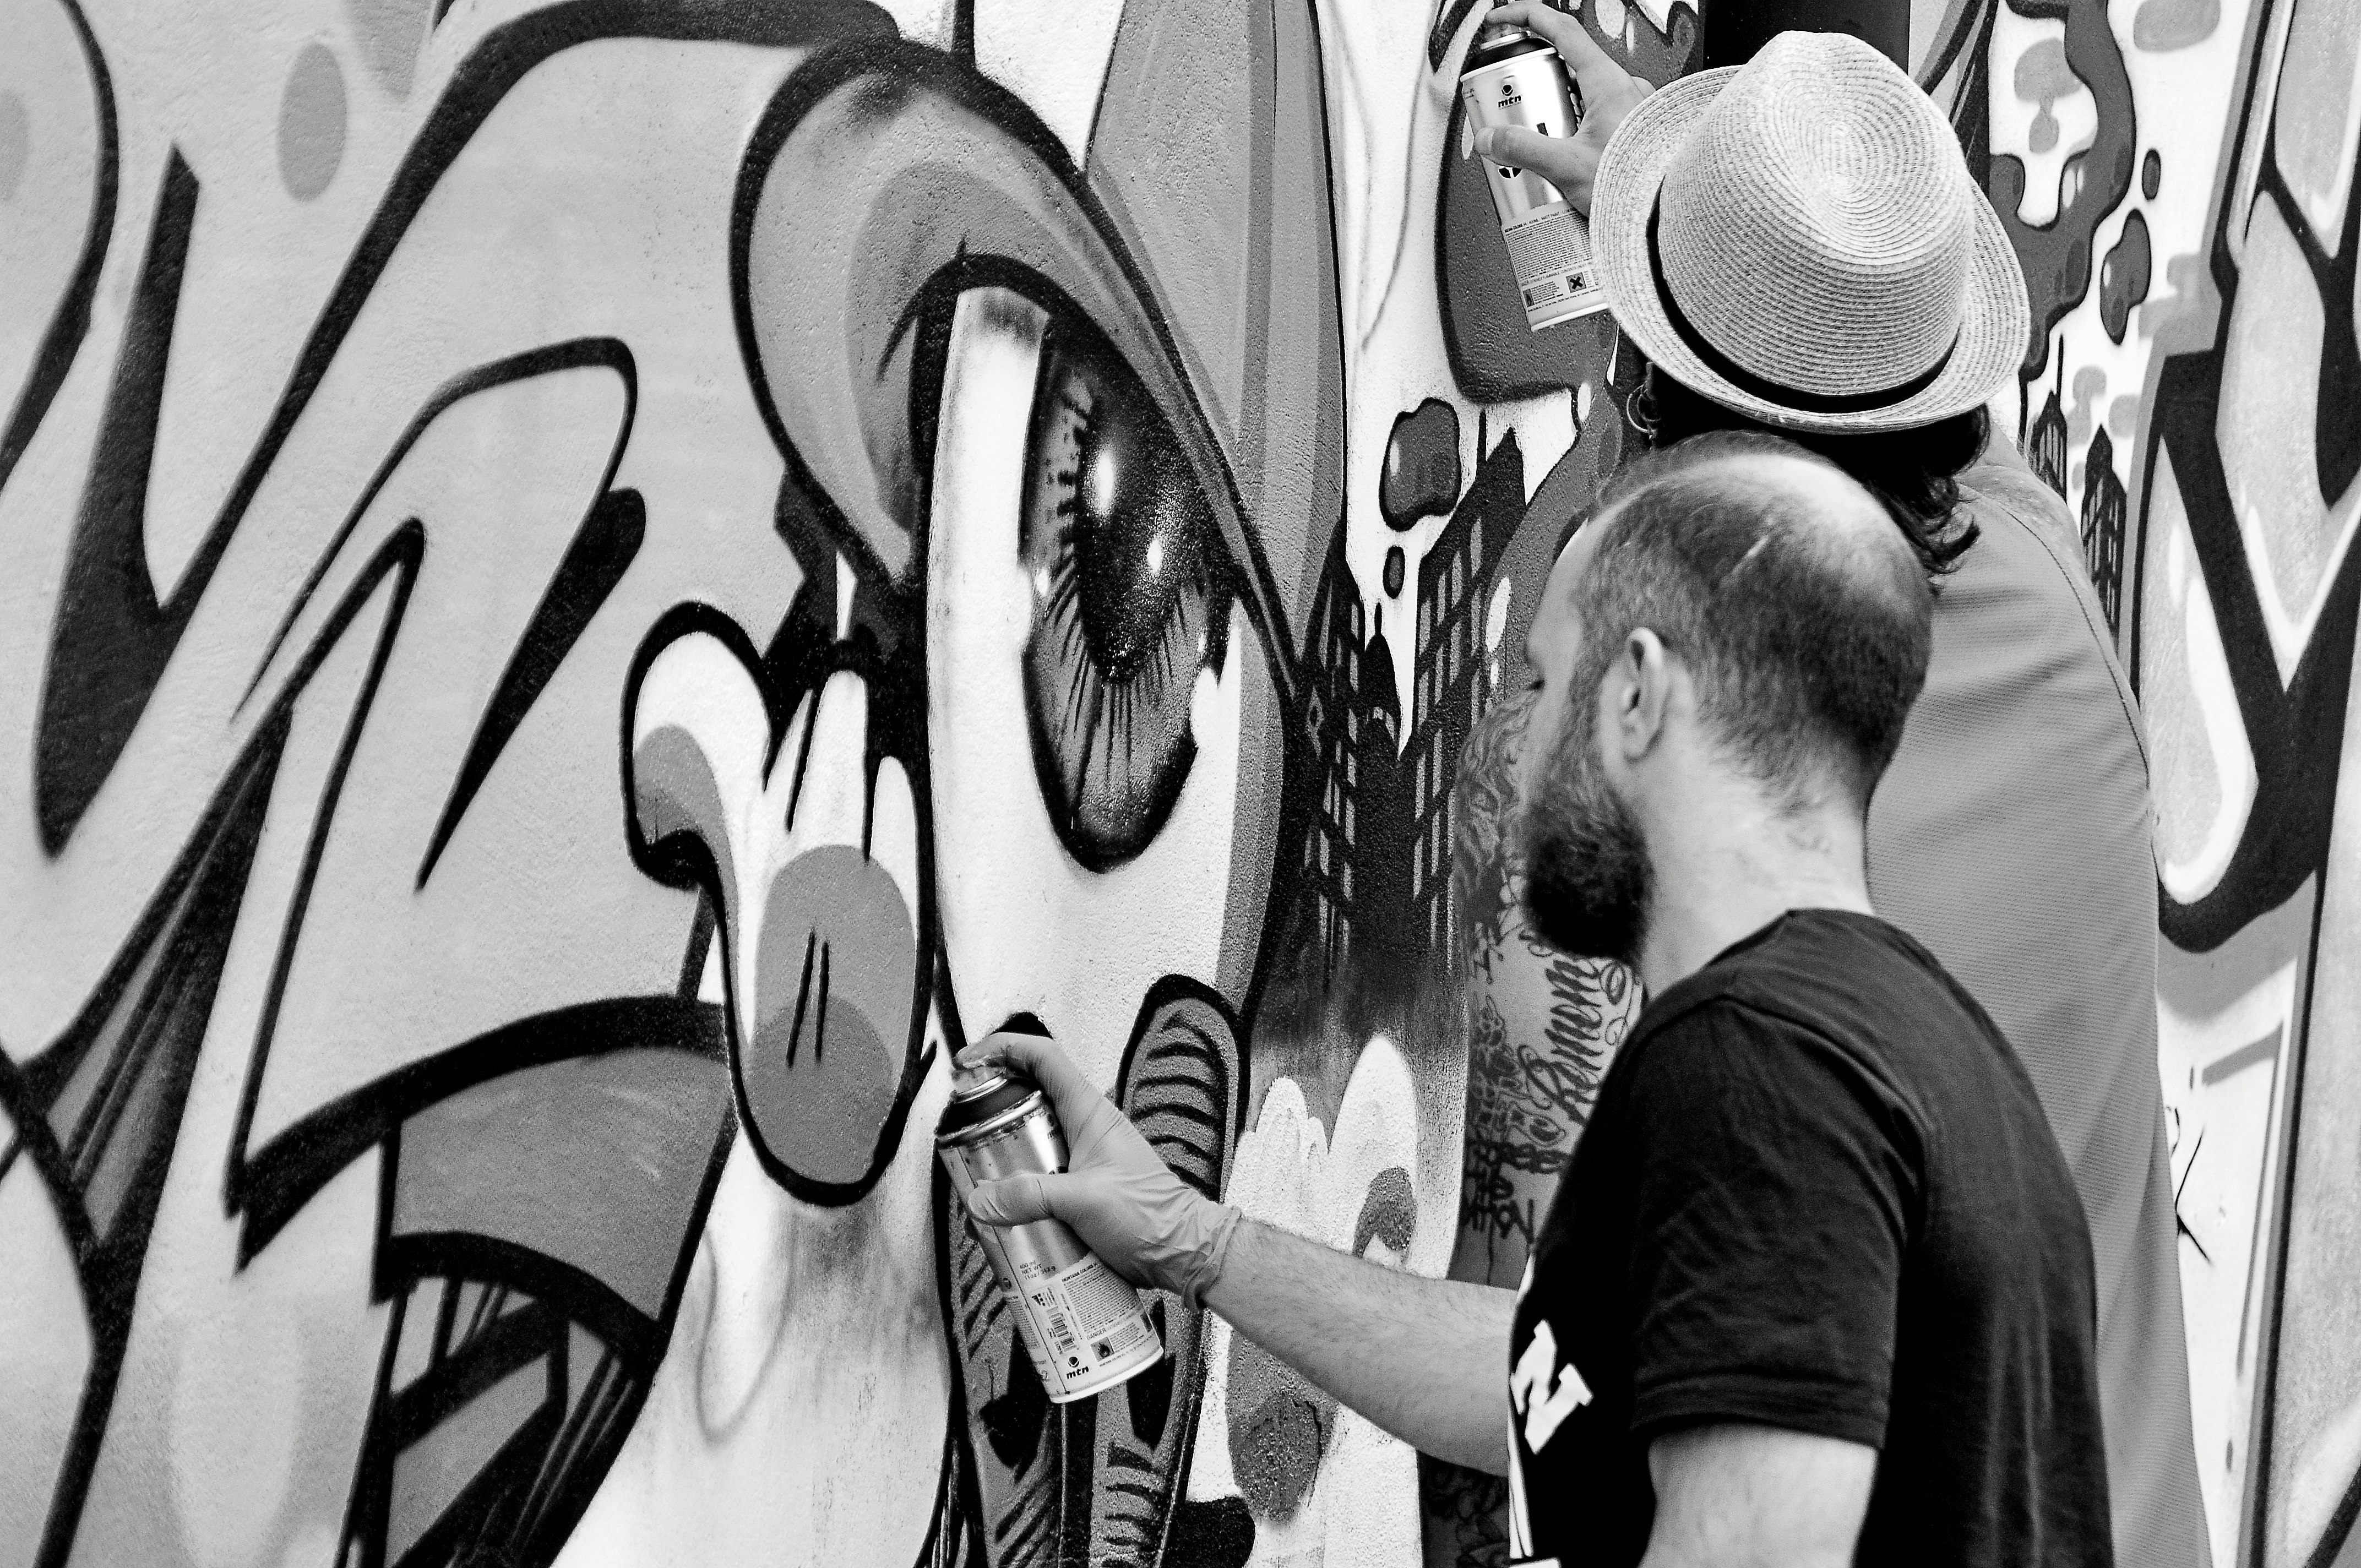 grayscale photography of two artists spraying graffiti wall